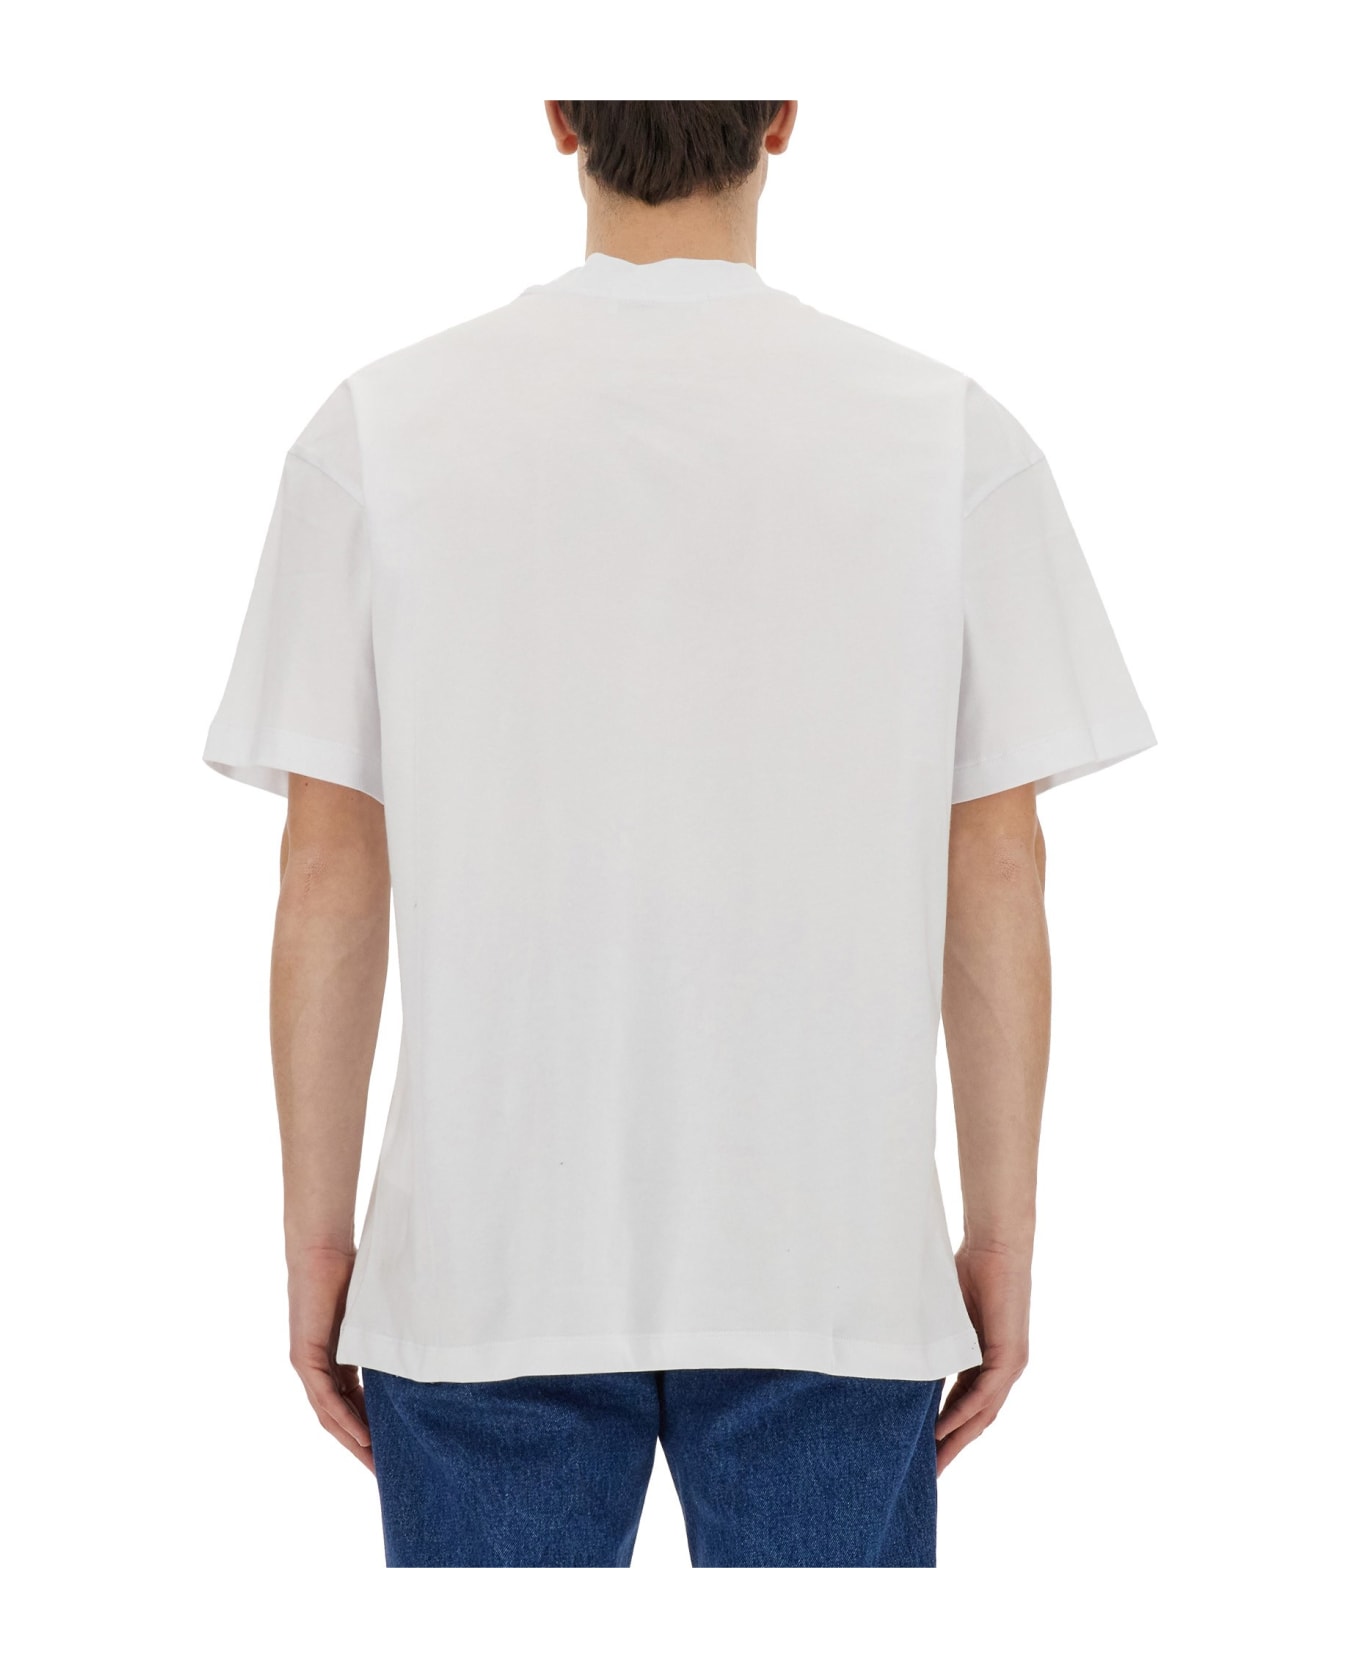 MSGM T-shirt With Logo - WHITE シャツ